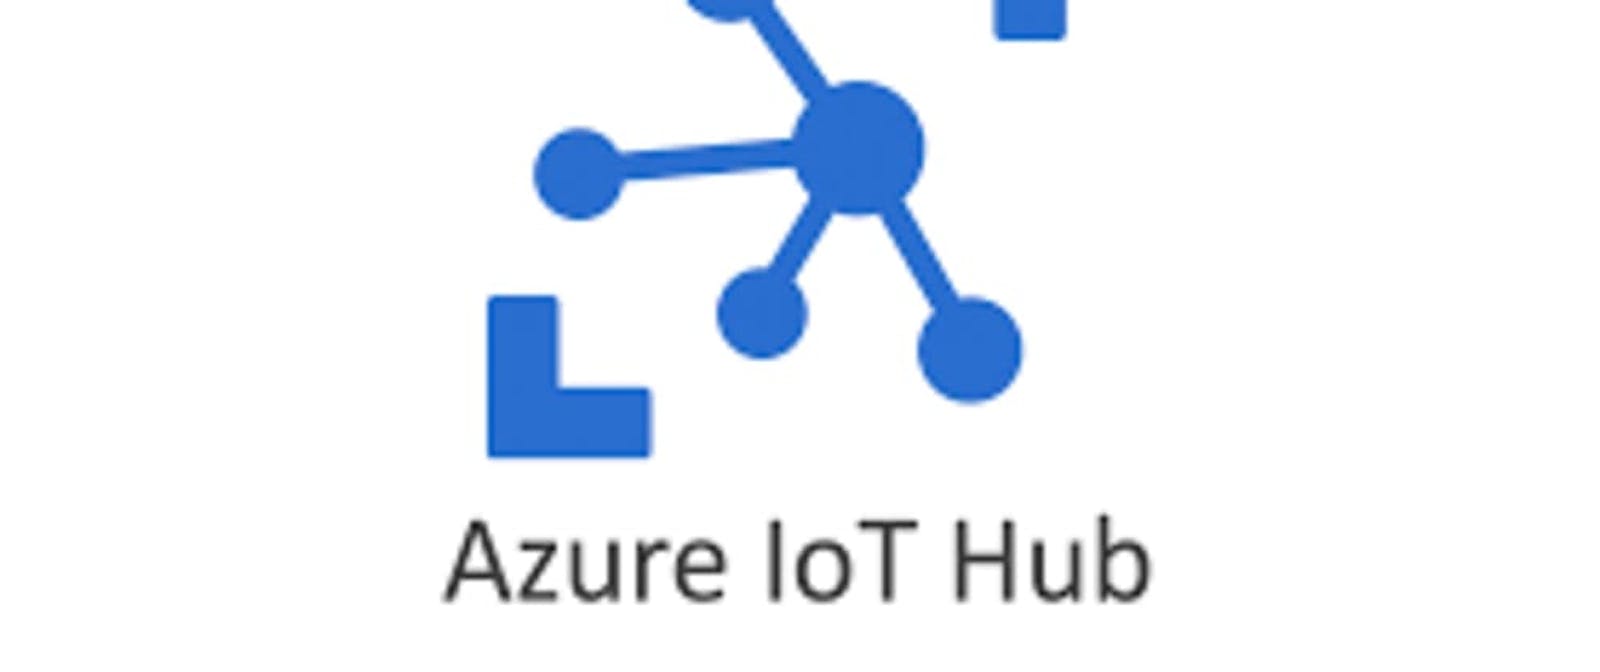 IoT Part 1: Create an IoT Hub On Azure Portal